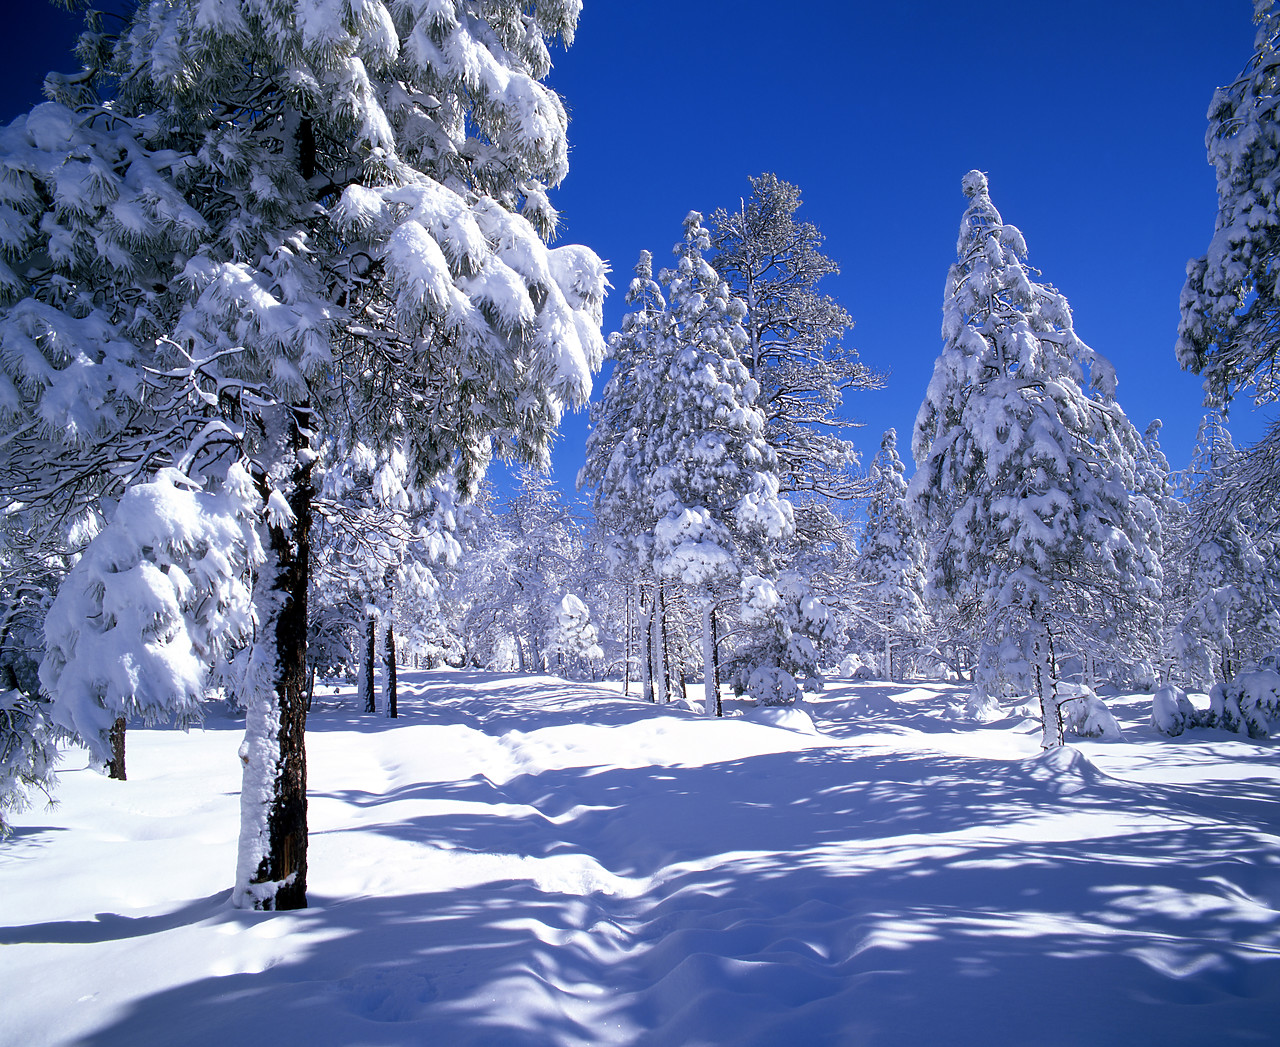 #980584-1 - Pines Trees in Snow, Flagstaff, Arizona, USA